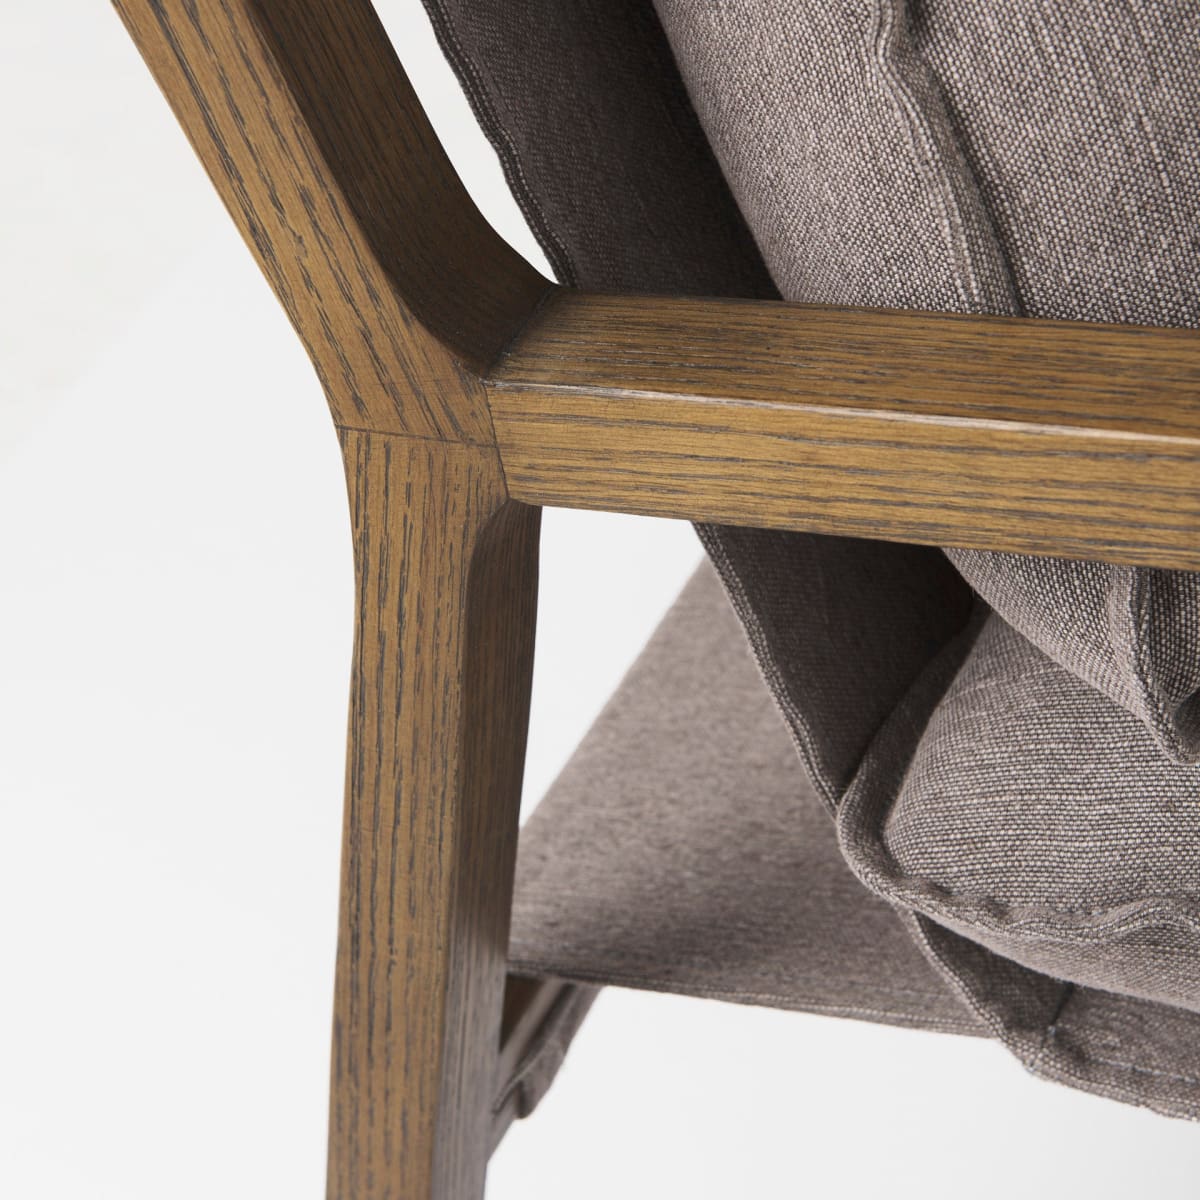 Brayden Accent Chair Gray Fabric | Brown Wood